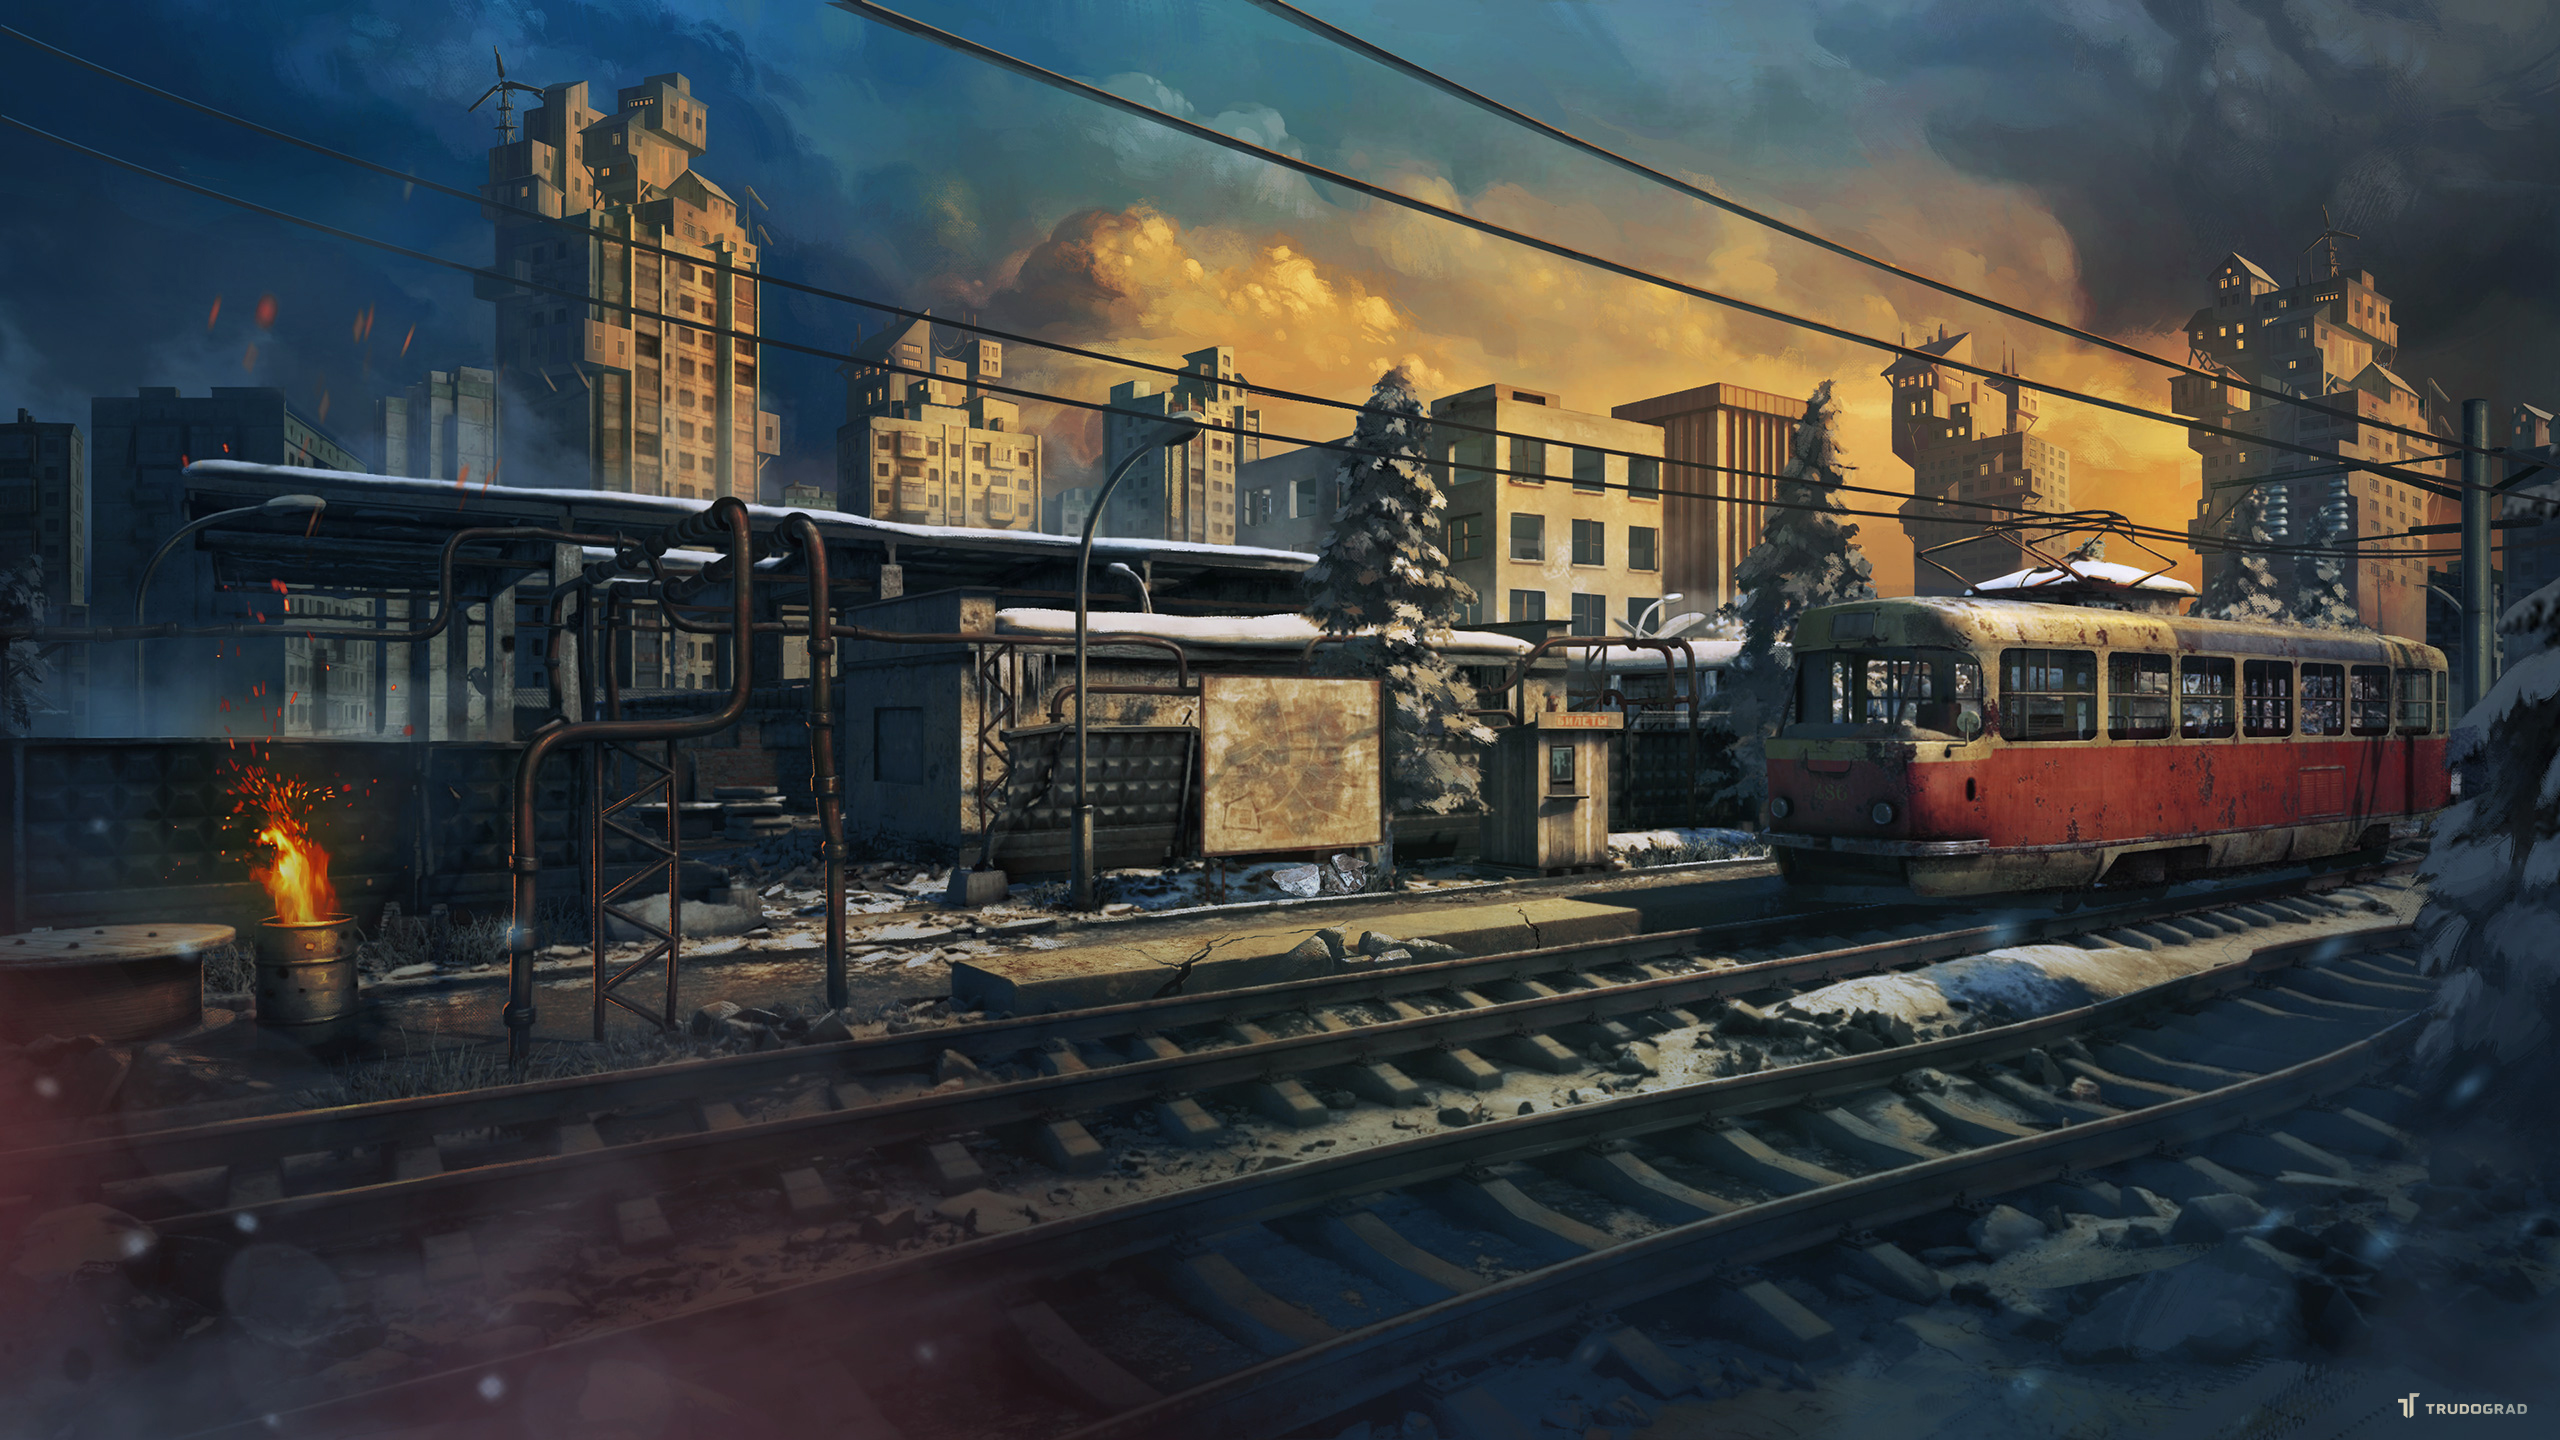 General 2560x1440 ATOM RPG RPG Trudograd train ruins railway city video game art video games